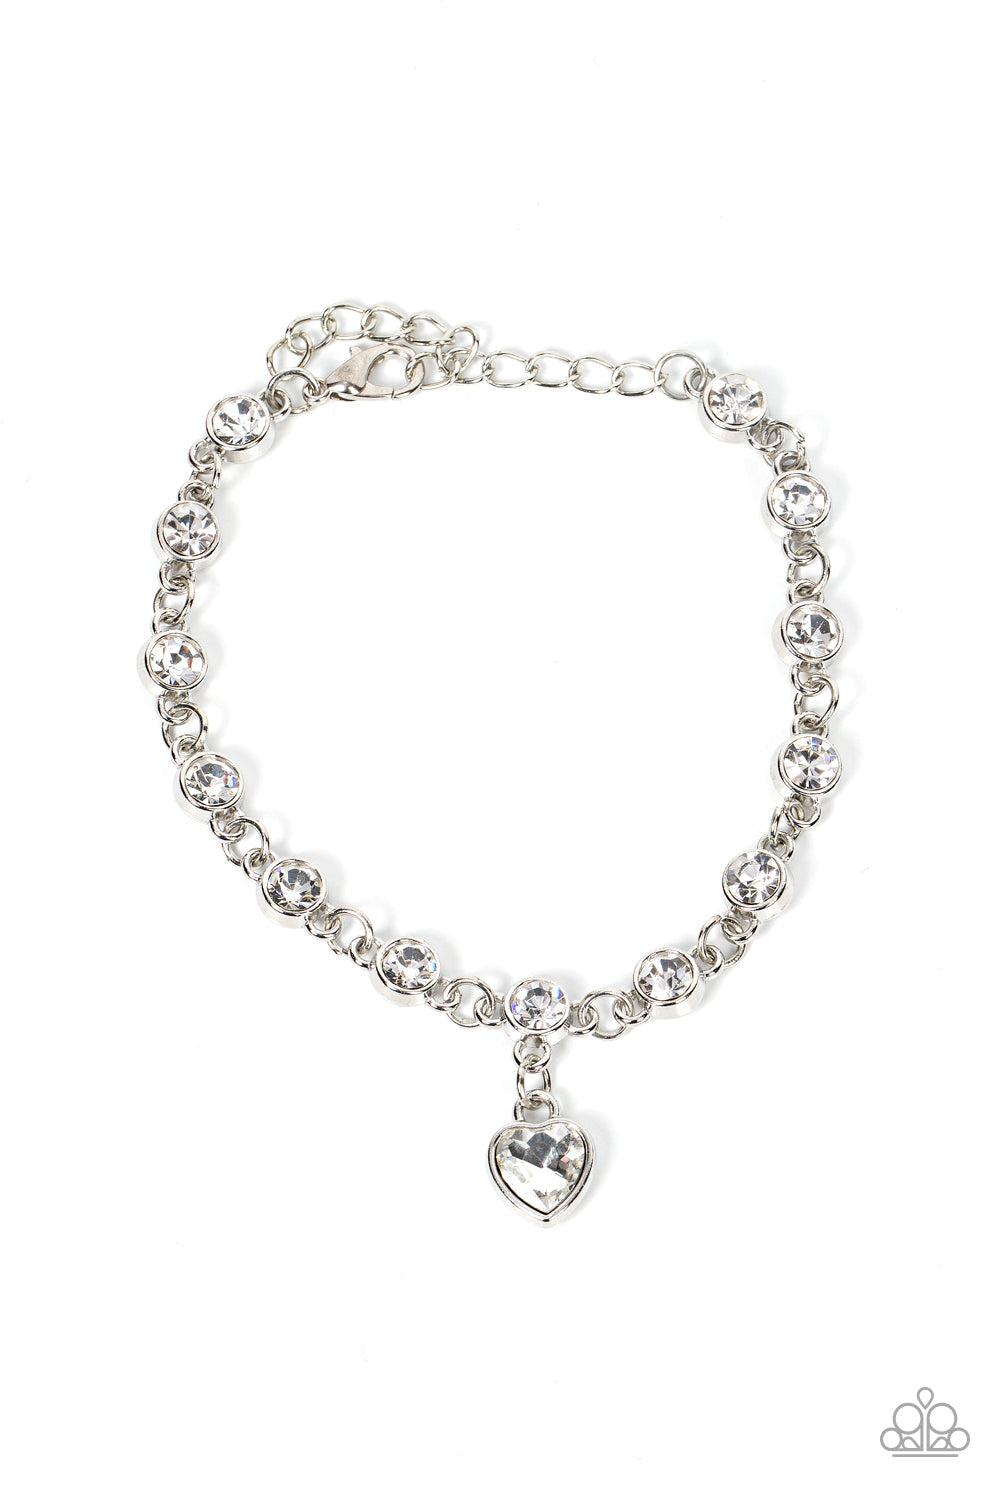 Truly Lovely White Rhinestone Heart Charm Bracelet - Paparazzi Accessories- lightbox - CarasShop.com - $5 Jewelry by Cara Jewels